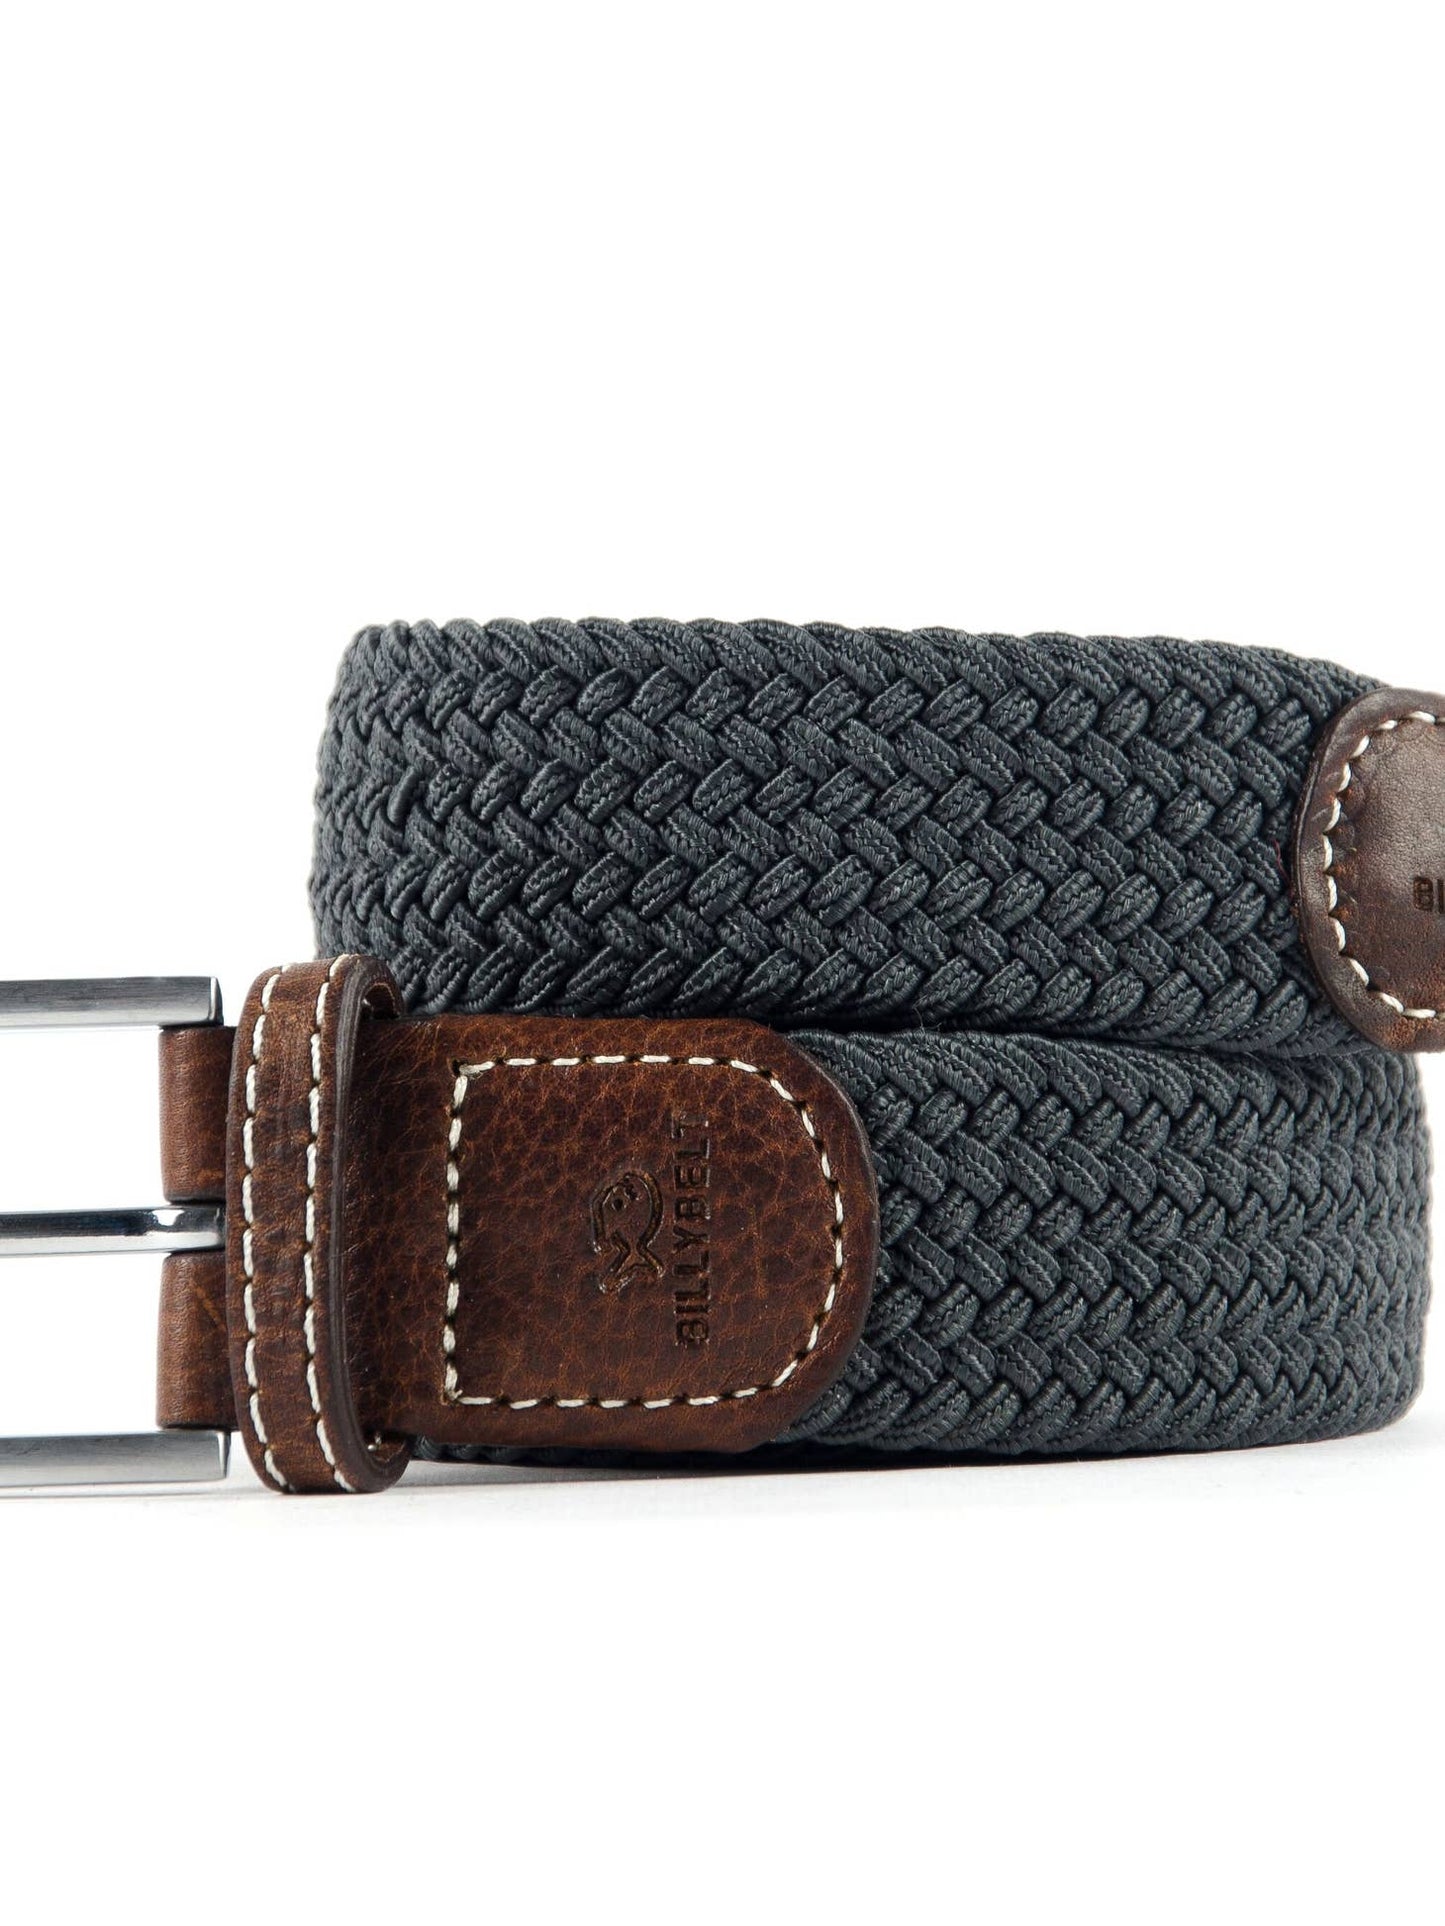 Woven Elastic Belt - Flannel Grey - Size 0